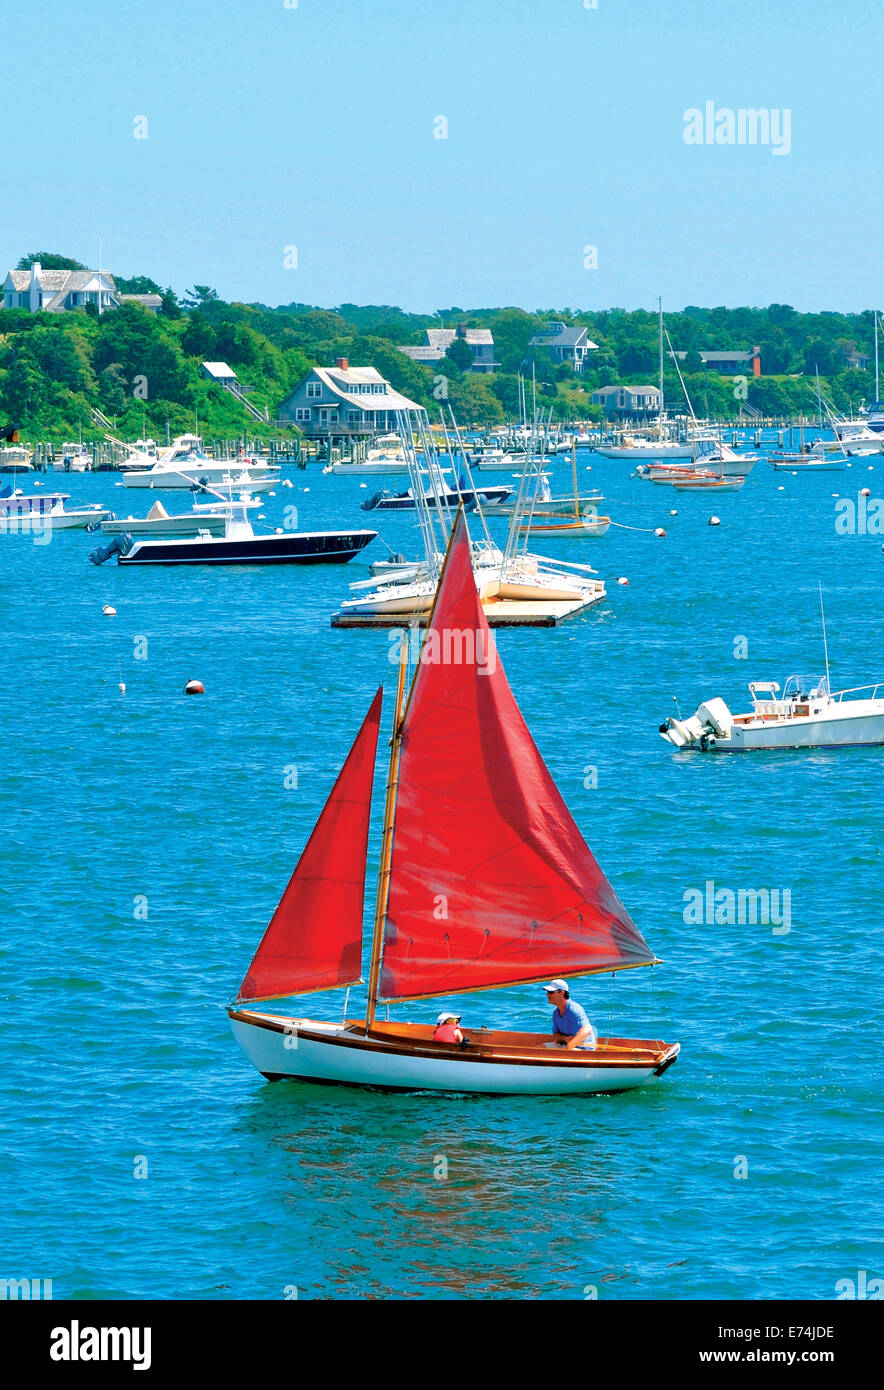 Sailboat with red sails, Martha's Vineyard, Massachusetts, USA Stock Photo